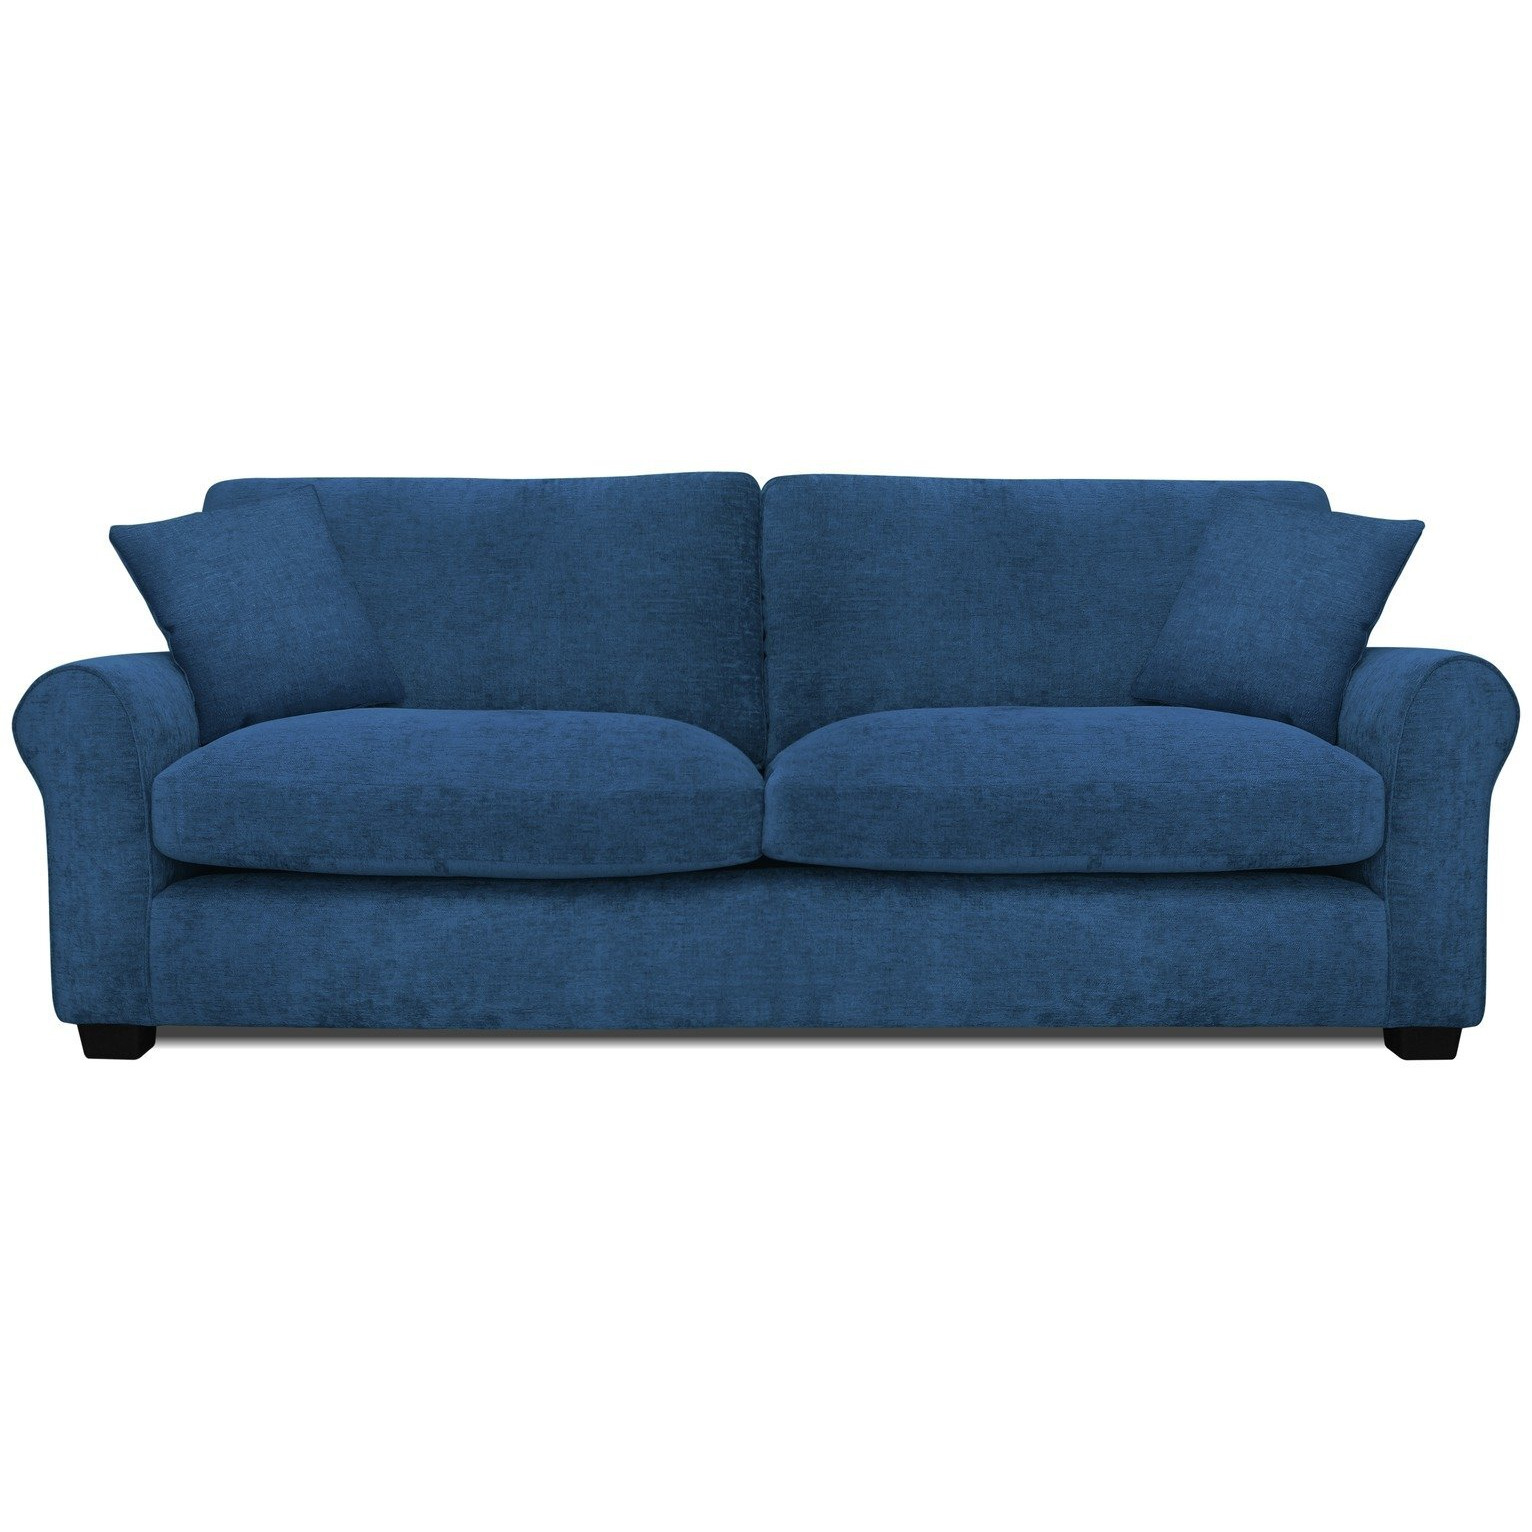 Argos Home Taylor Fabric 4 Seater Sofa - Blue - image 1